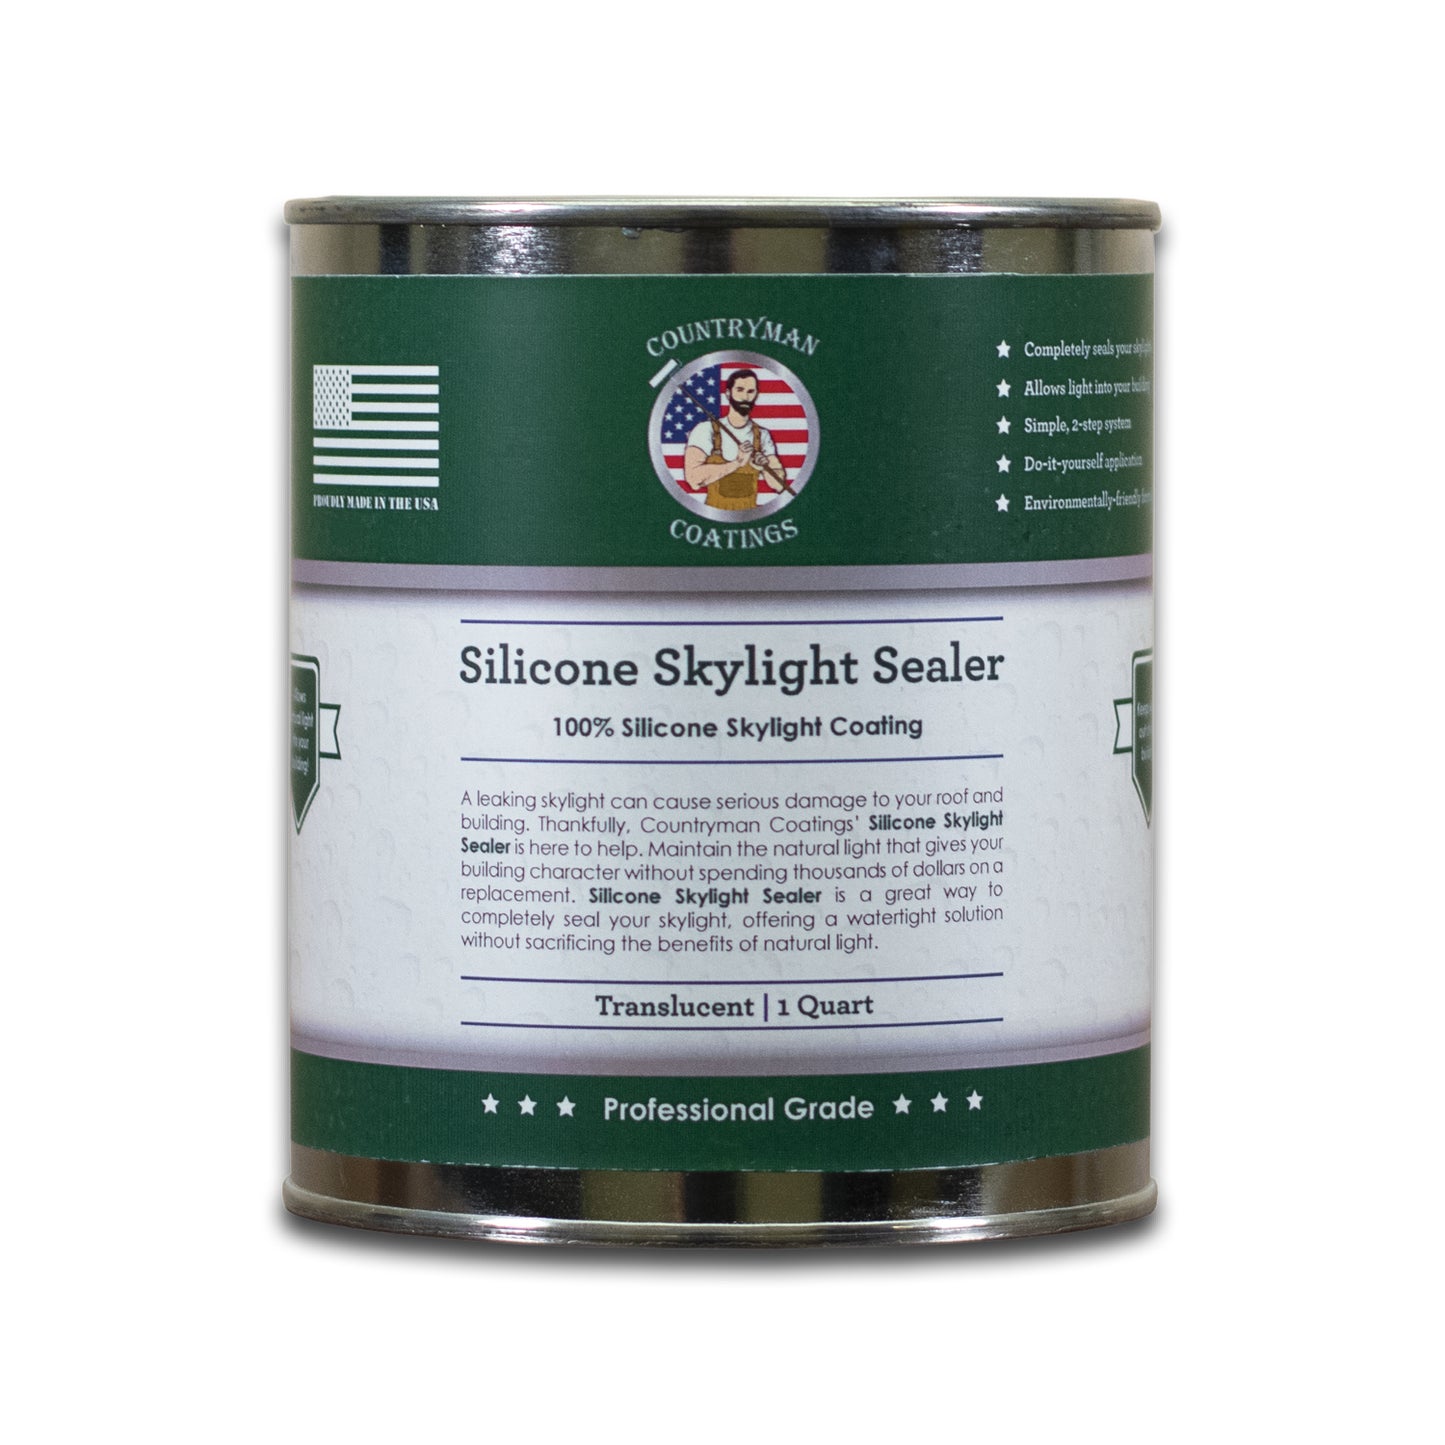 Silicone Skylight Sealer